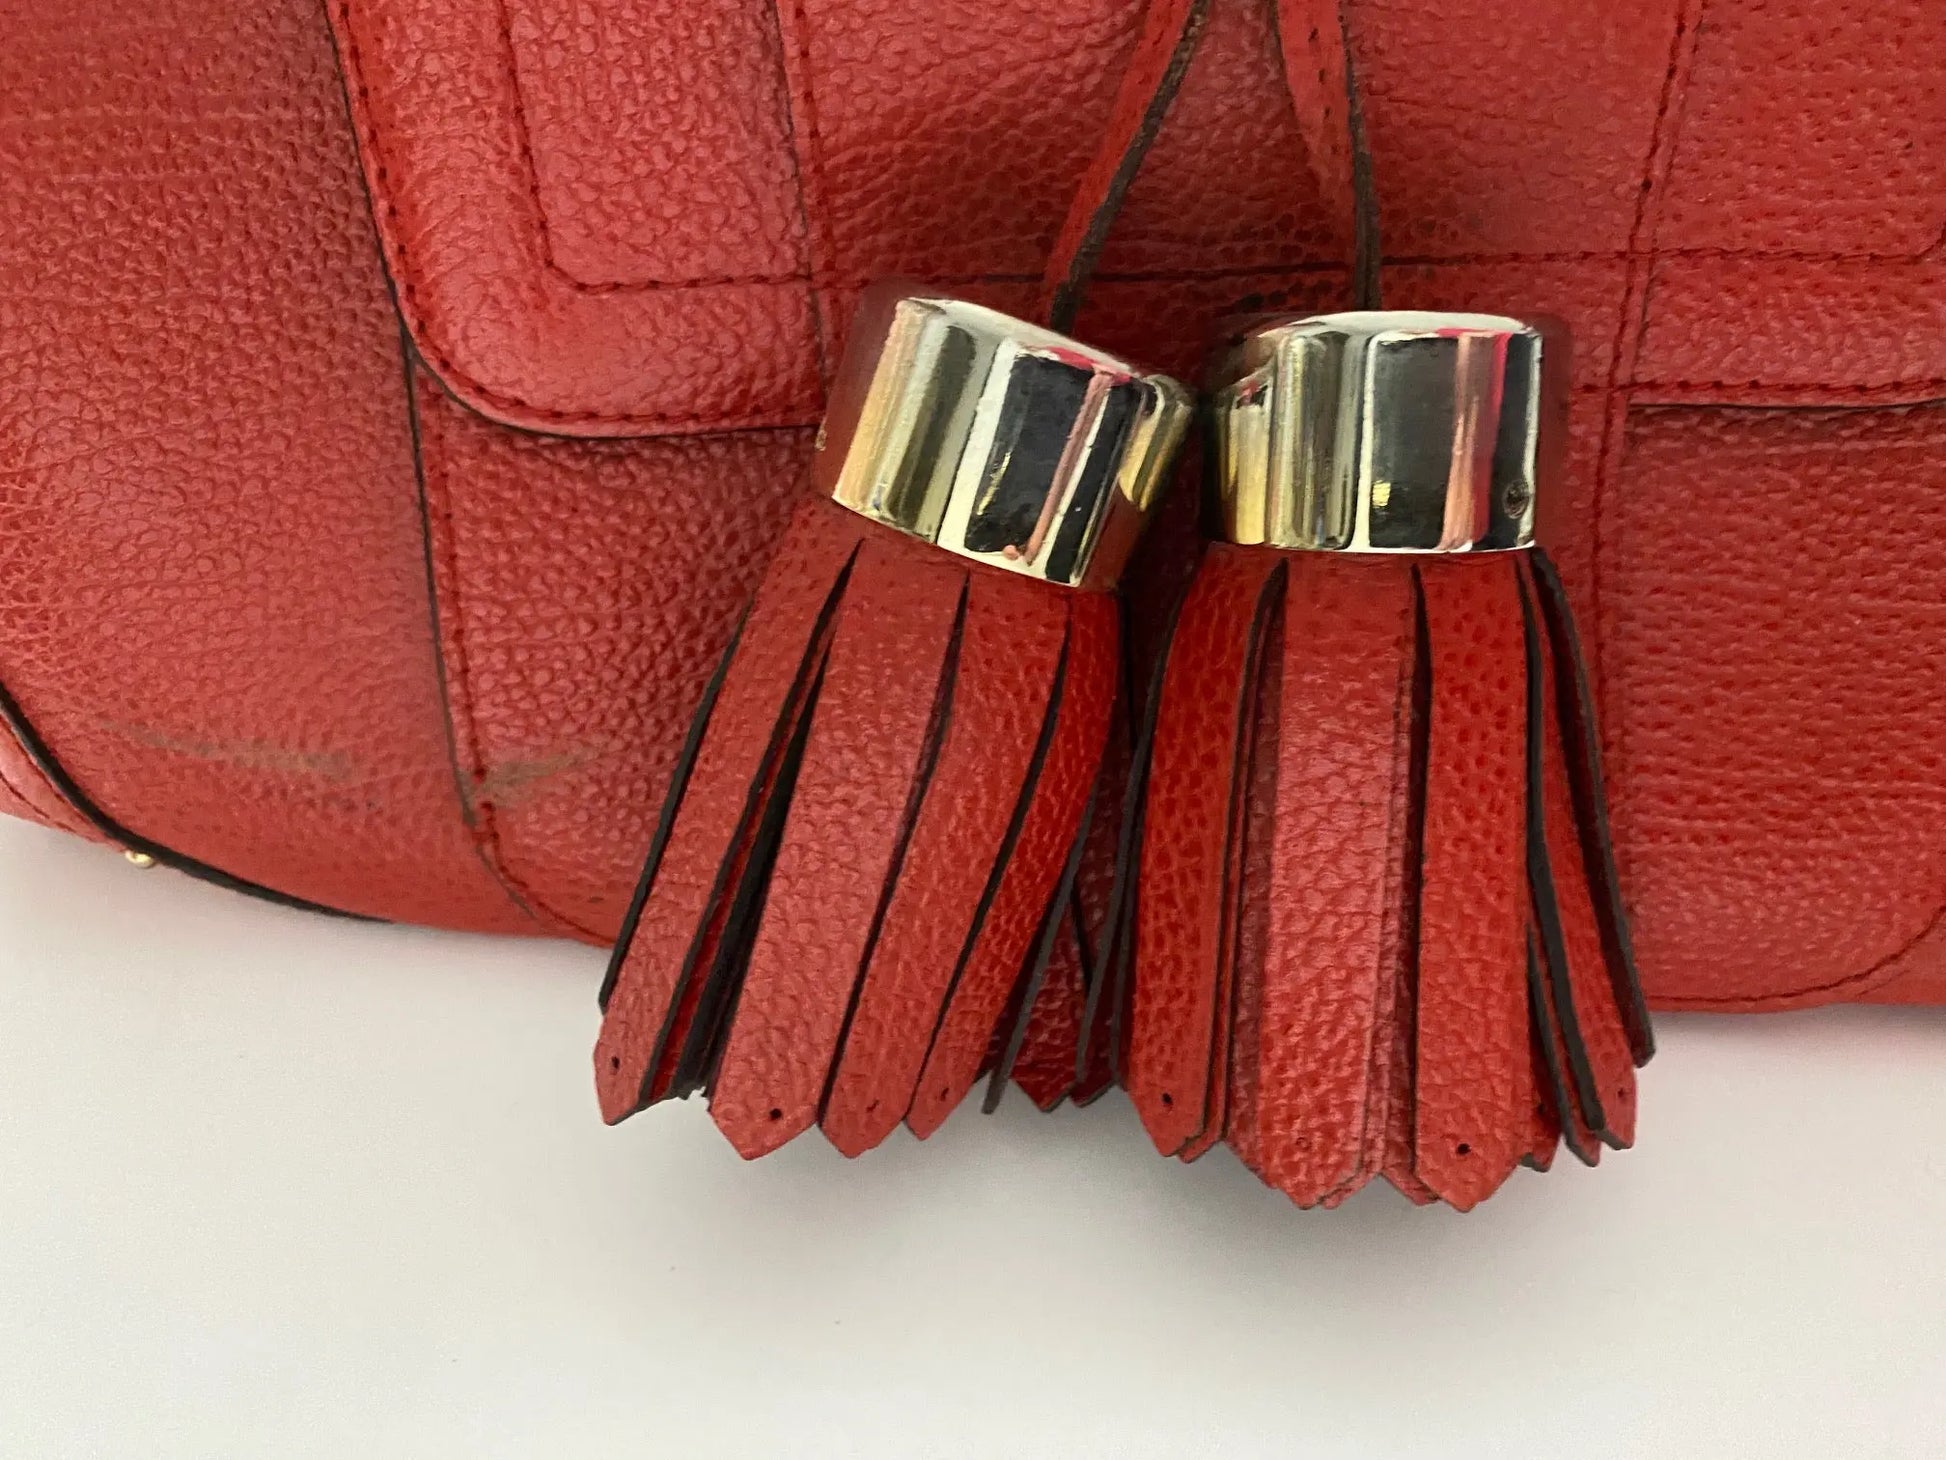 Red Leather Handbag by Luella Bartley Vivienne Austin